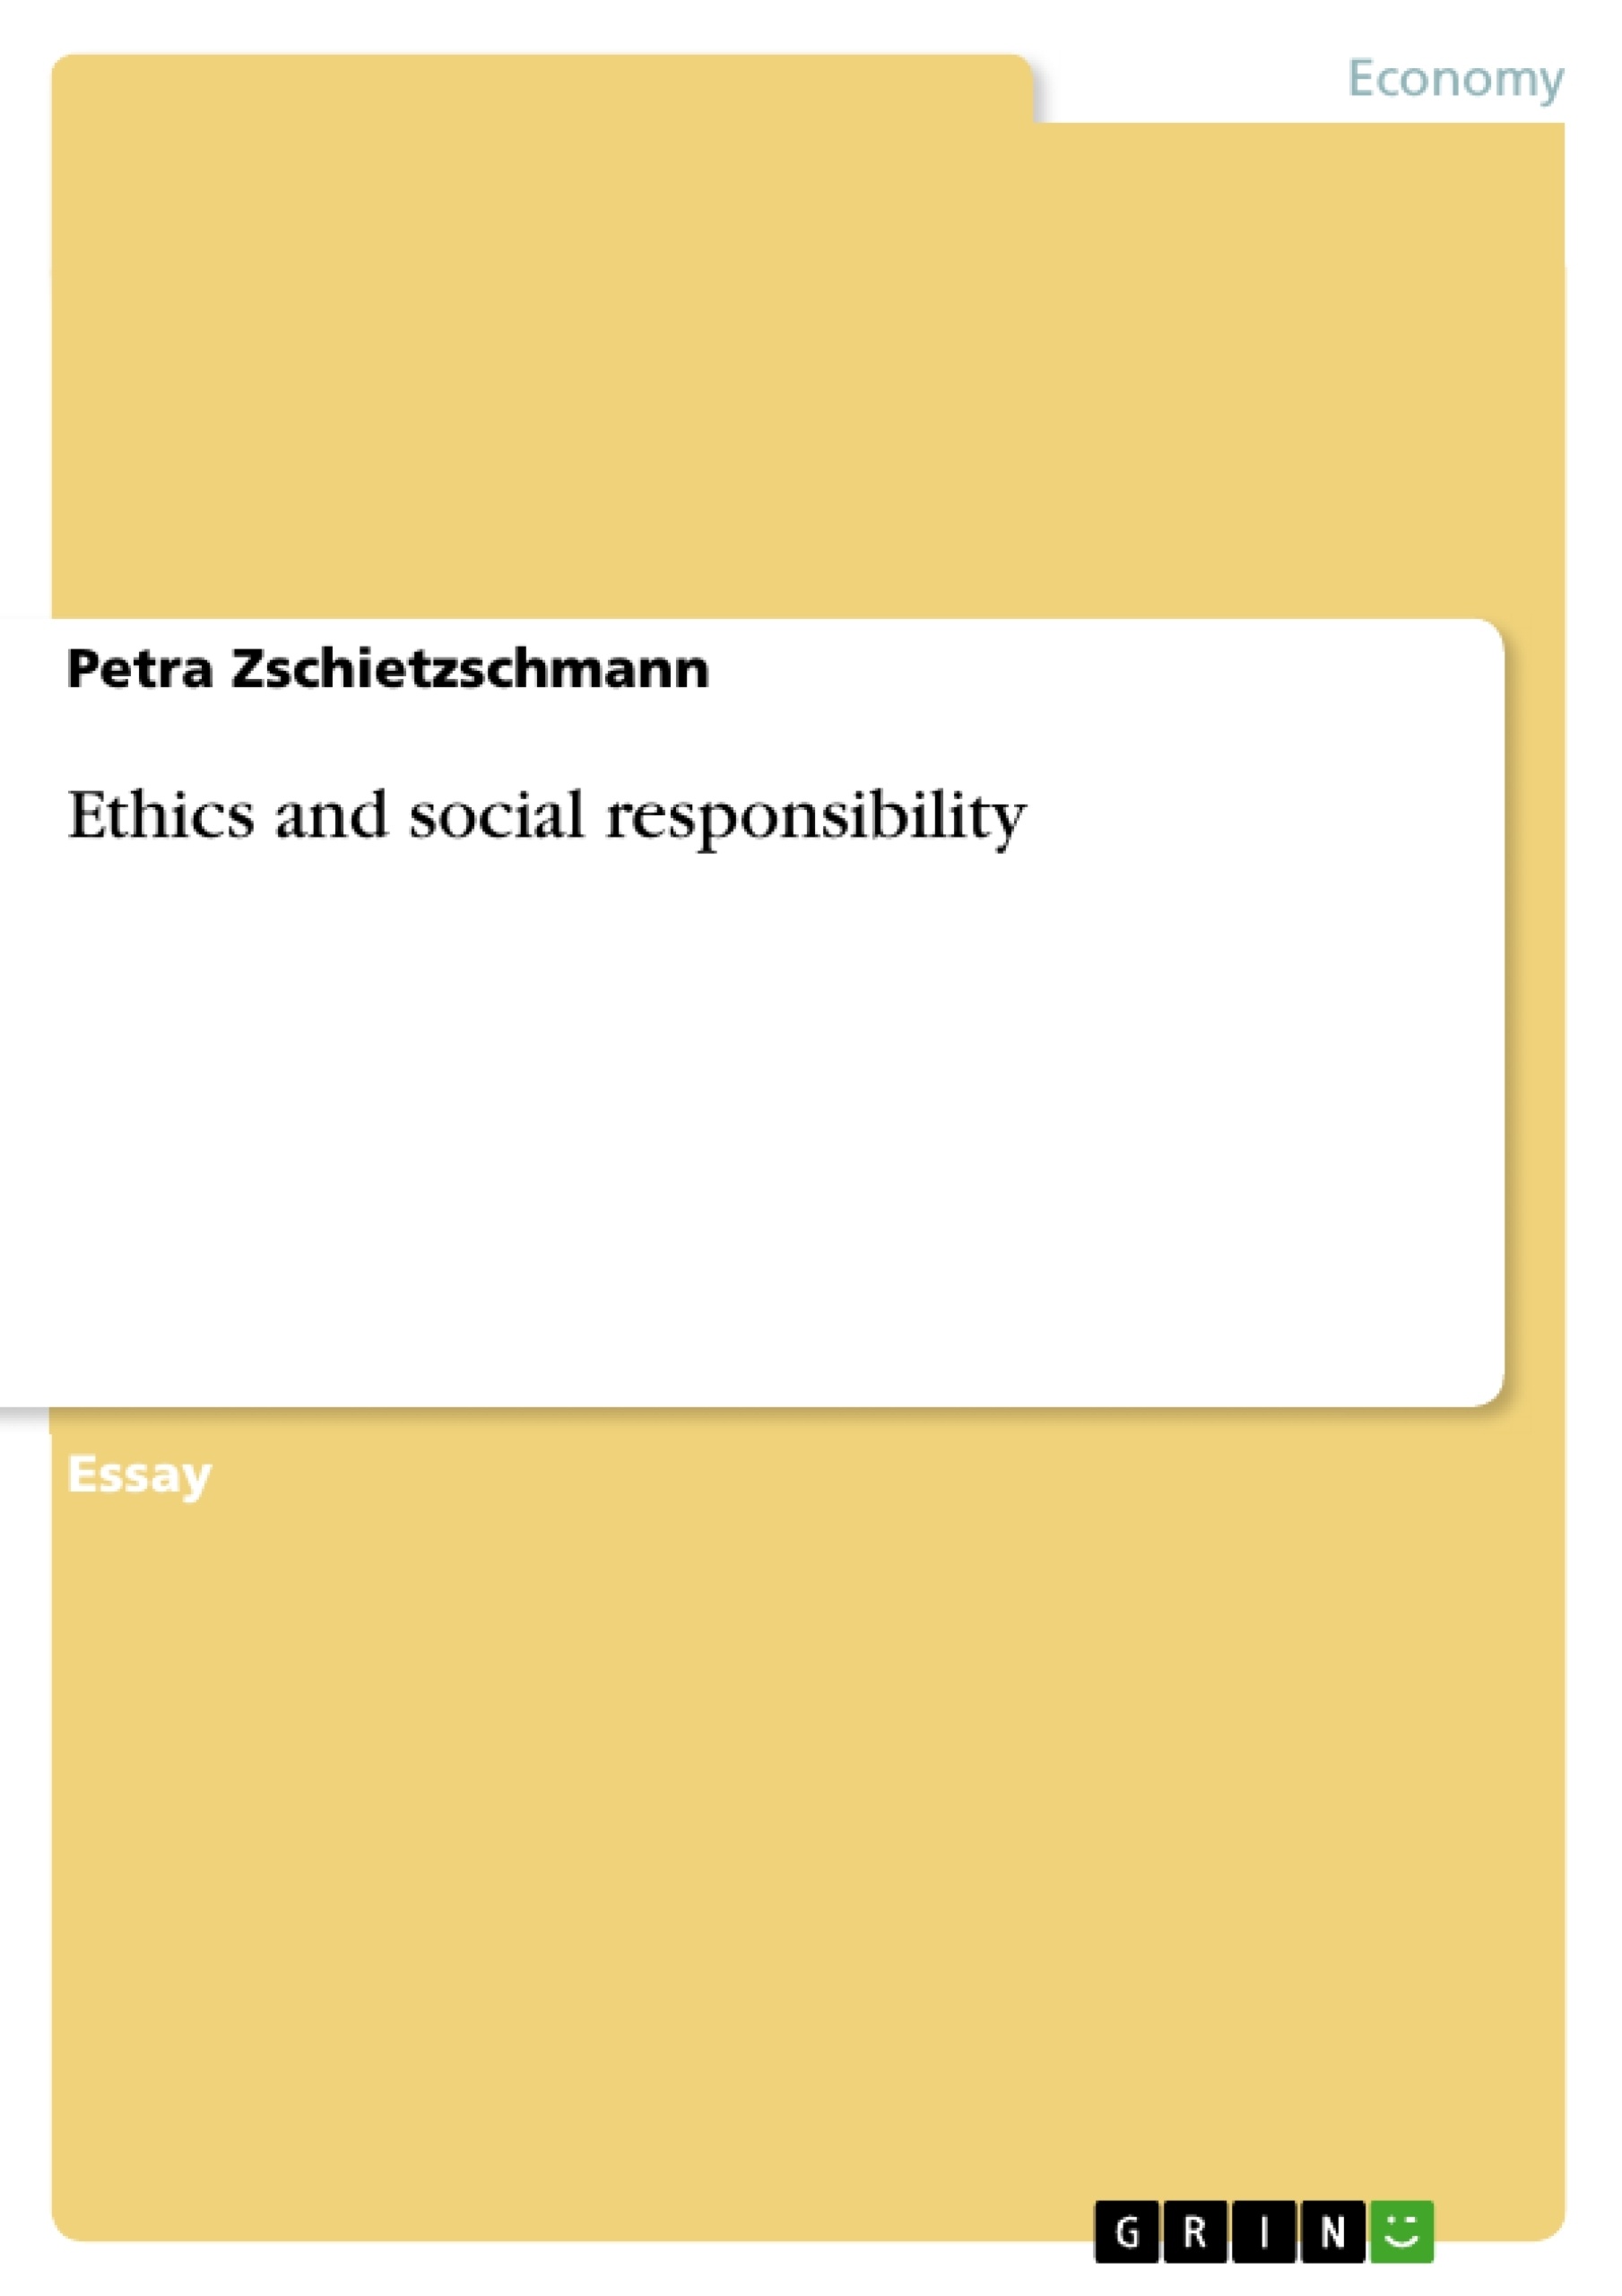 Essay on social responsibility